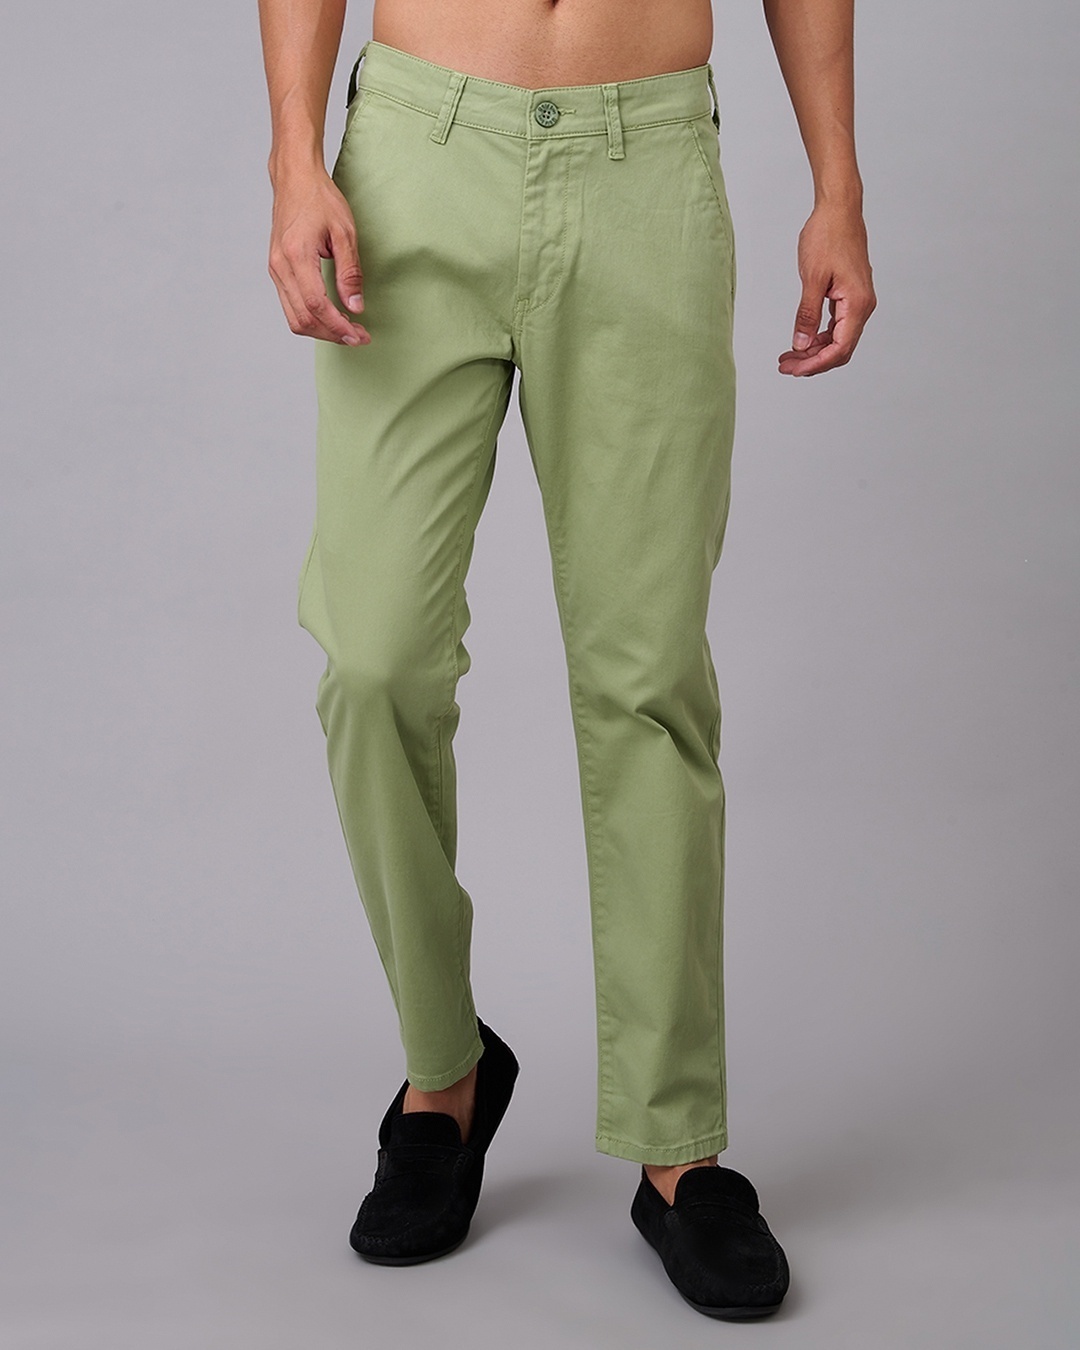 Light Green Pants Coord with Black Tshirt Bramisole 3piece   KrynandMoey